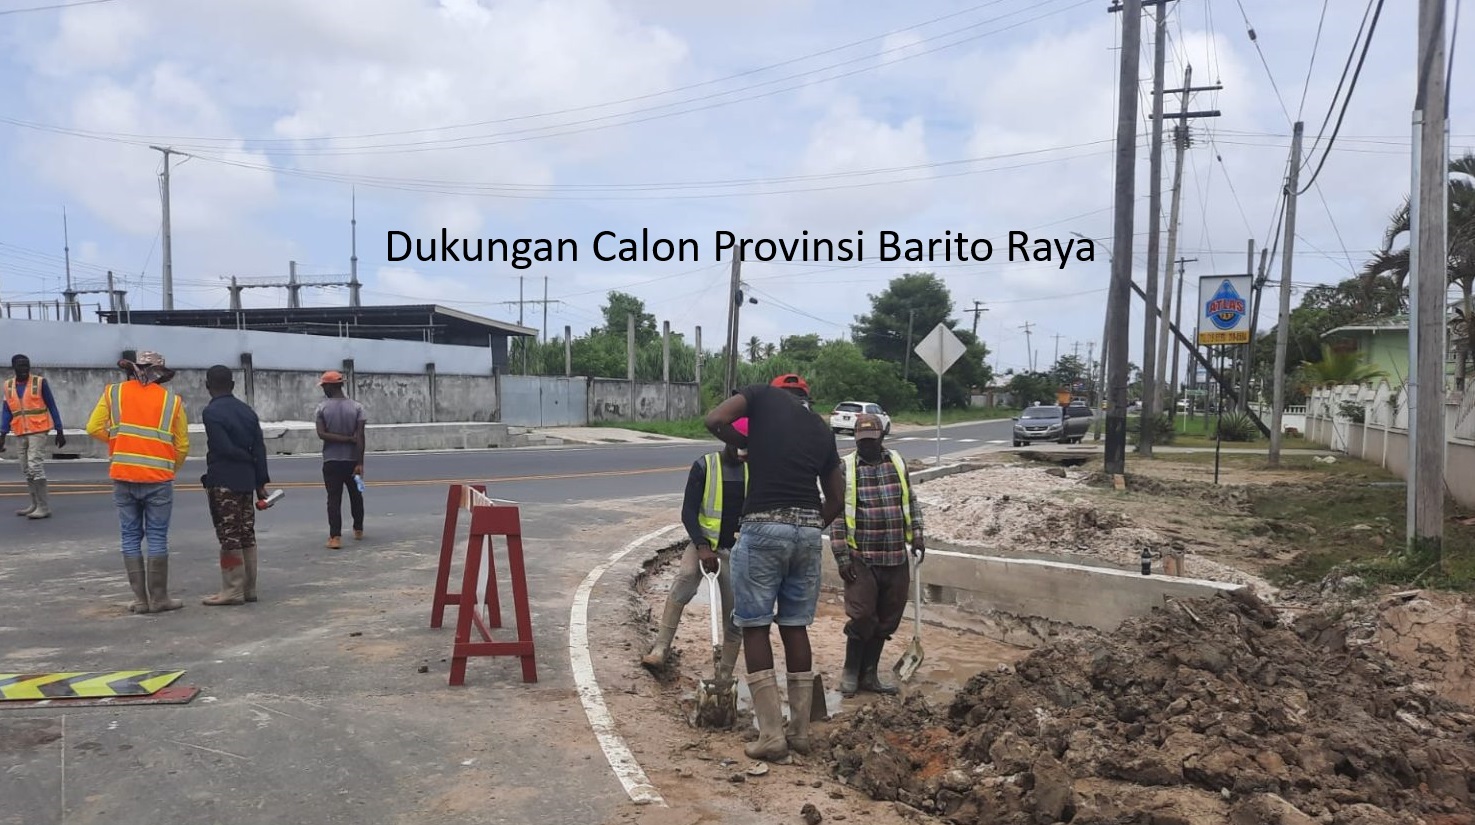 Wacana Provinsi Barito Raya: Sebuah Langkah Besar Menuju Pemekaran Wilayah Baru di Kalimantan Tengah